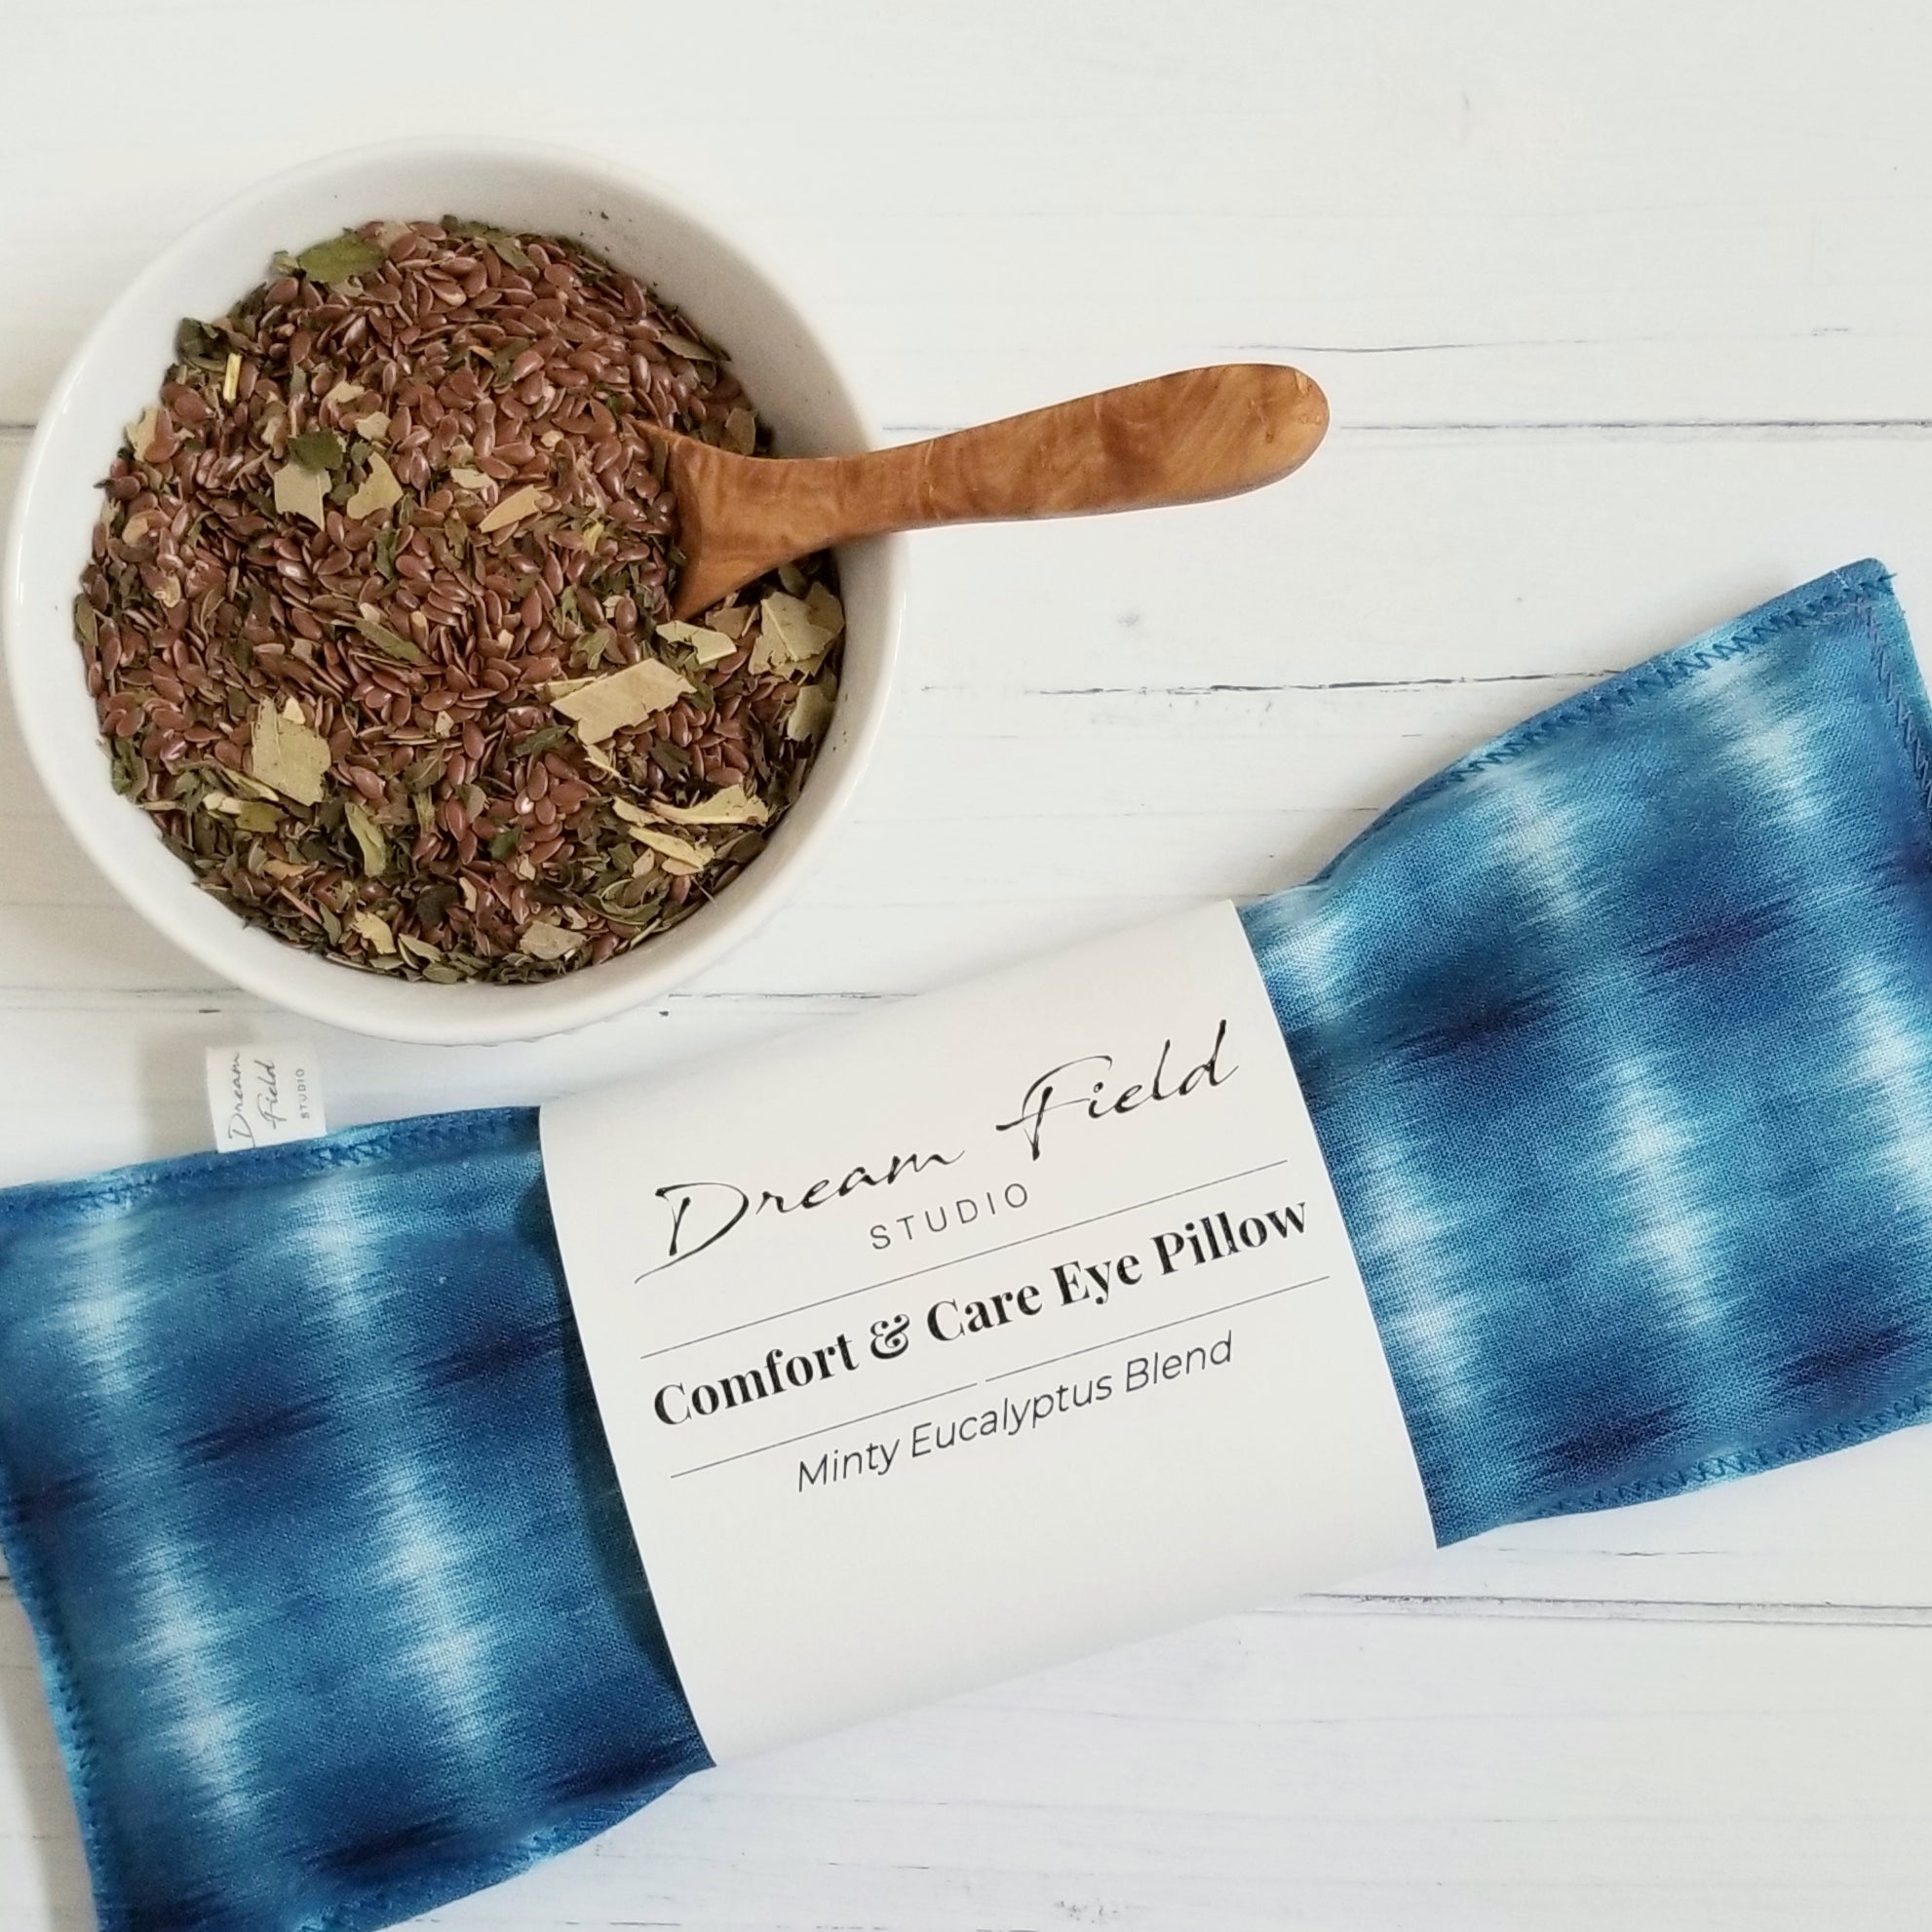 eucalyptus mint eye pillow shibori blue print and bowl of flax seeds and dried organic herbs